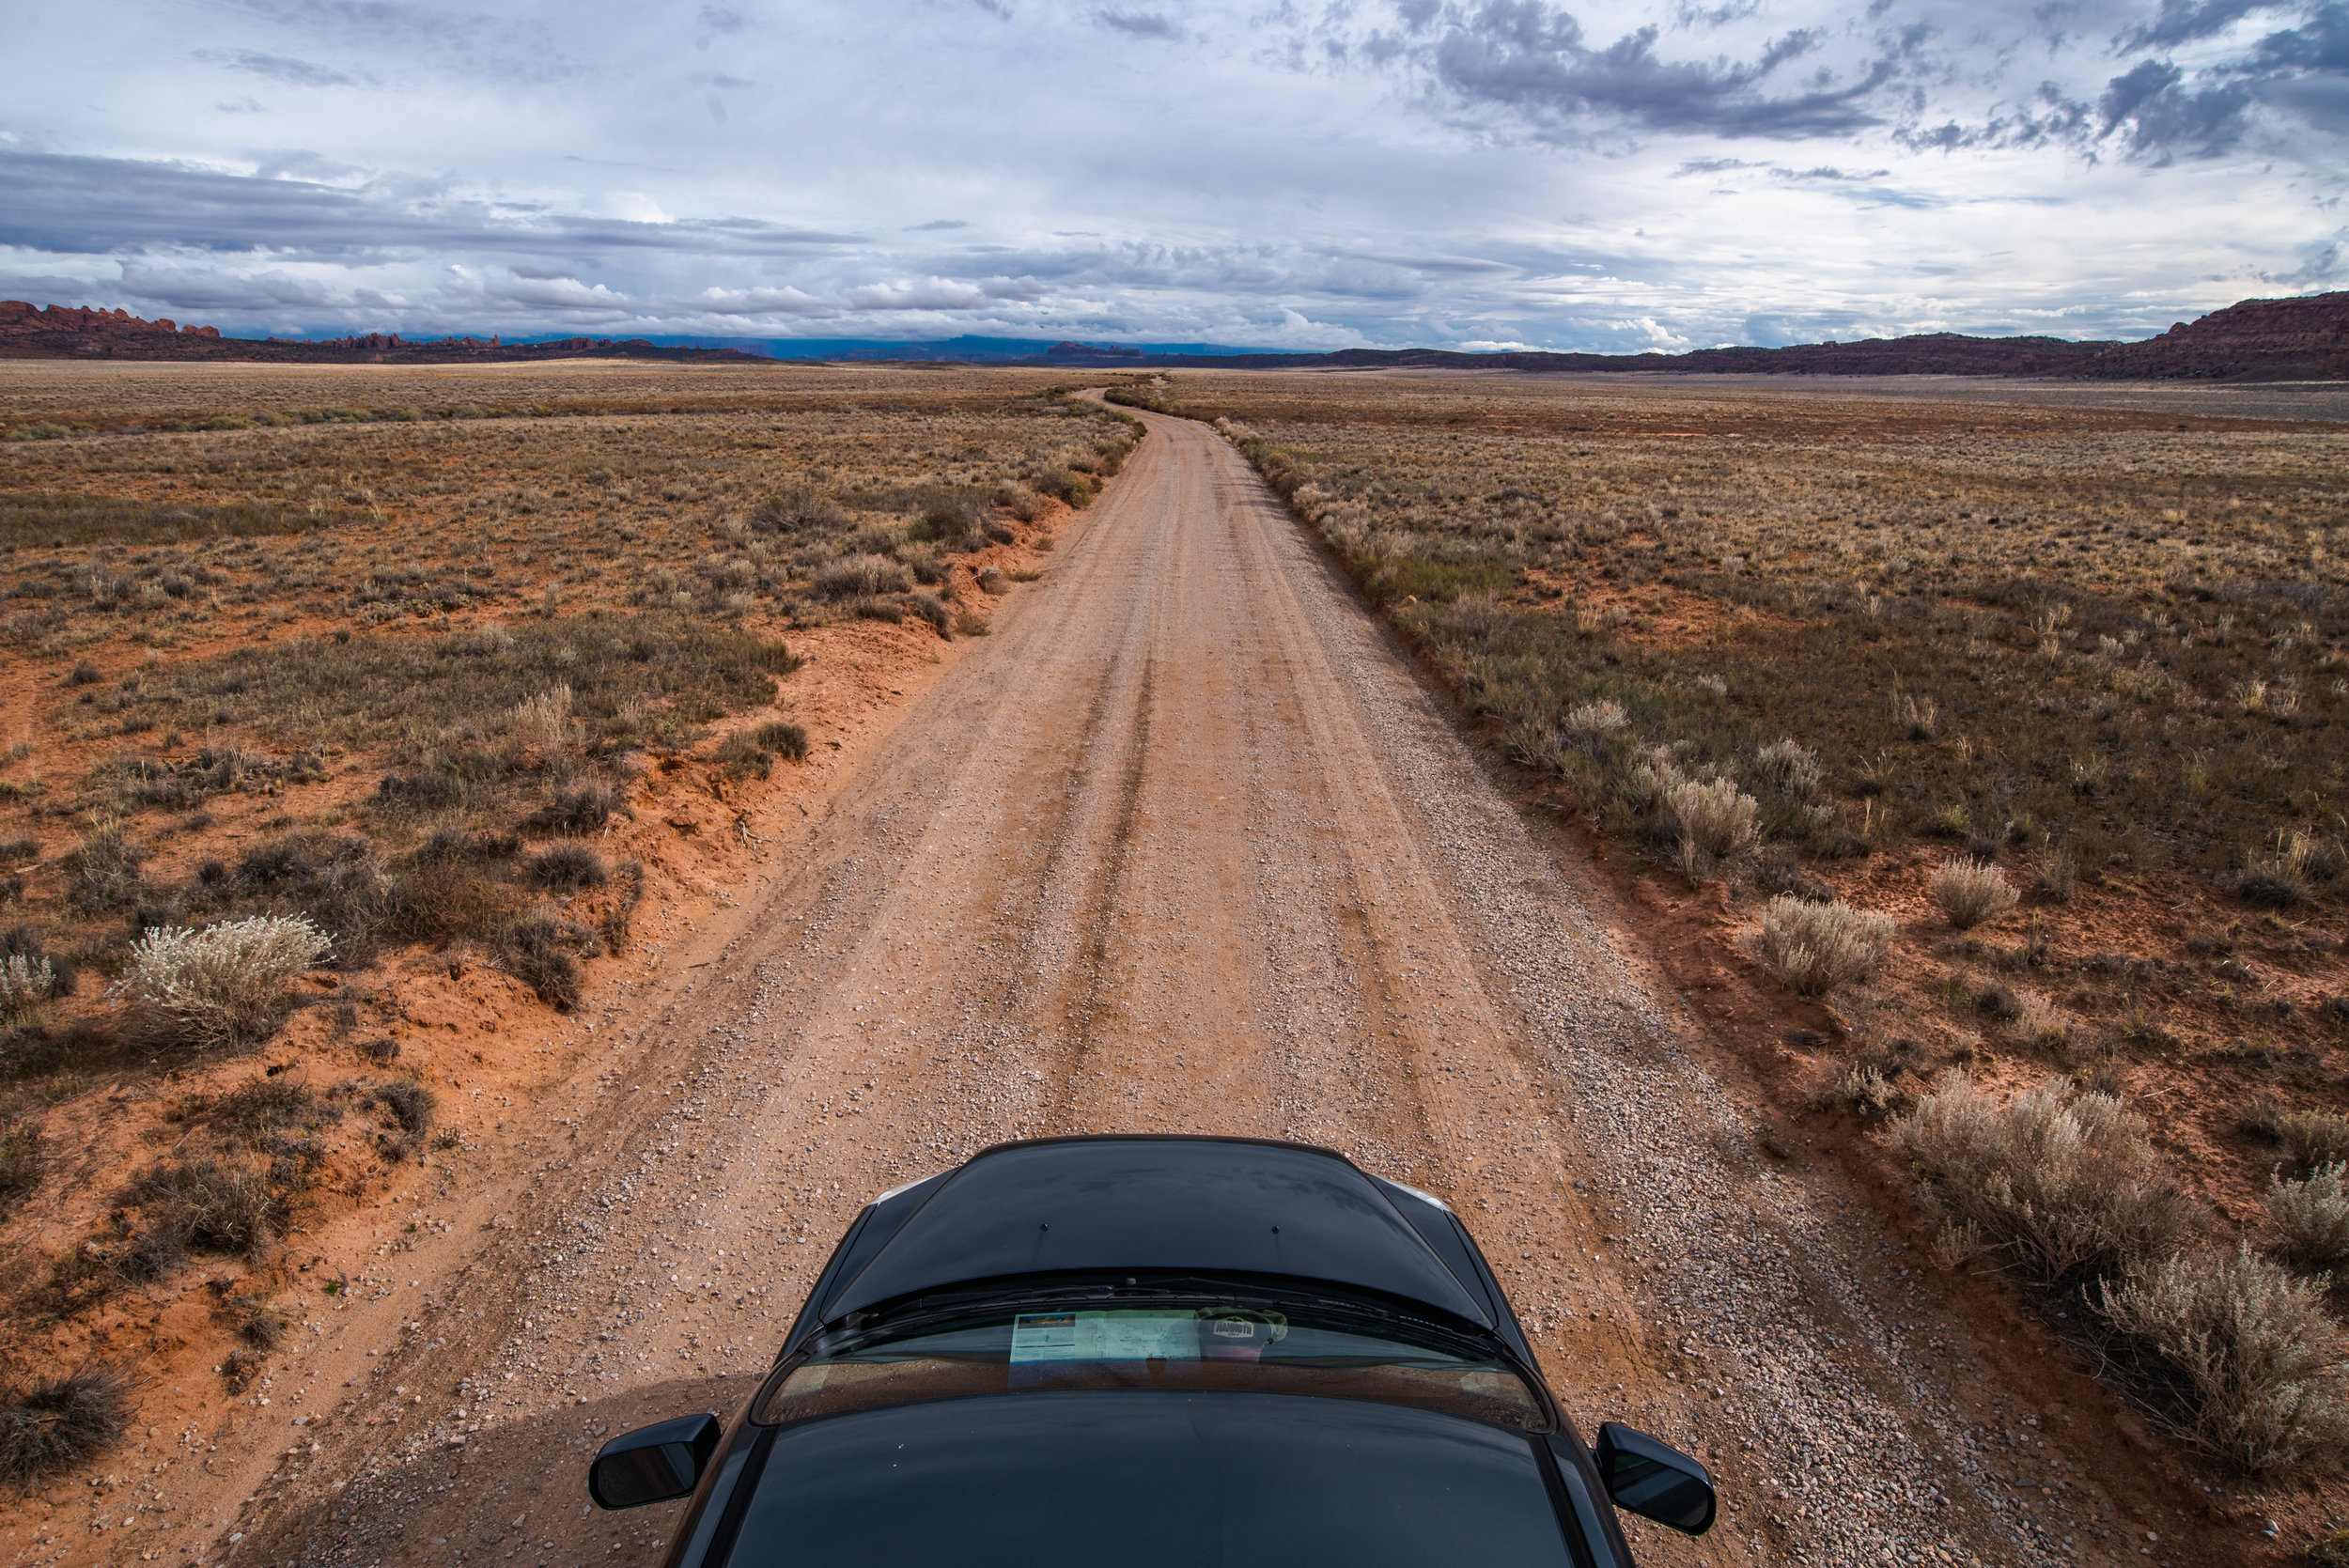 The Road Through Salt Valley